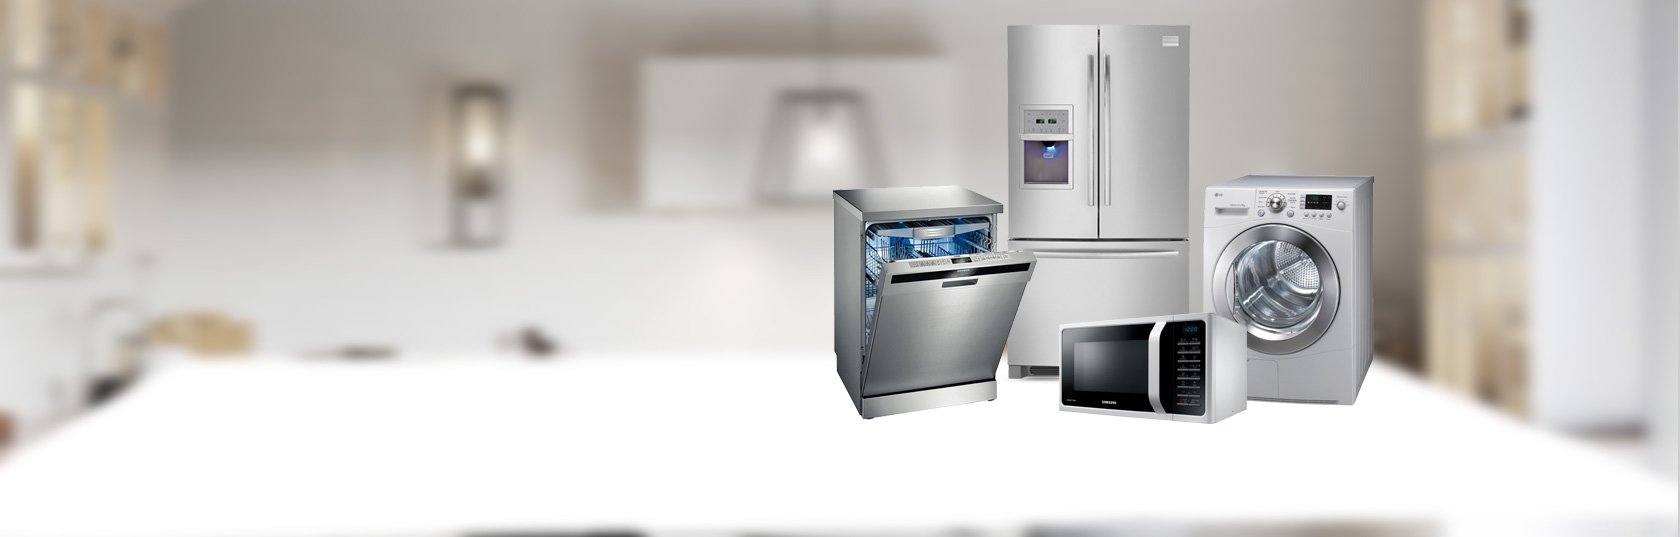 Tucson Sub Zero Repair Expert Dependable Refrigeration & Appliance Repair Service